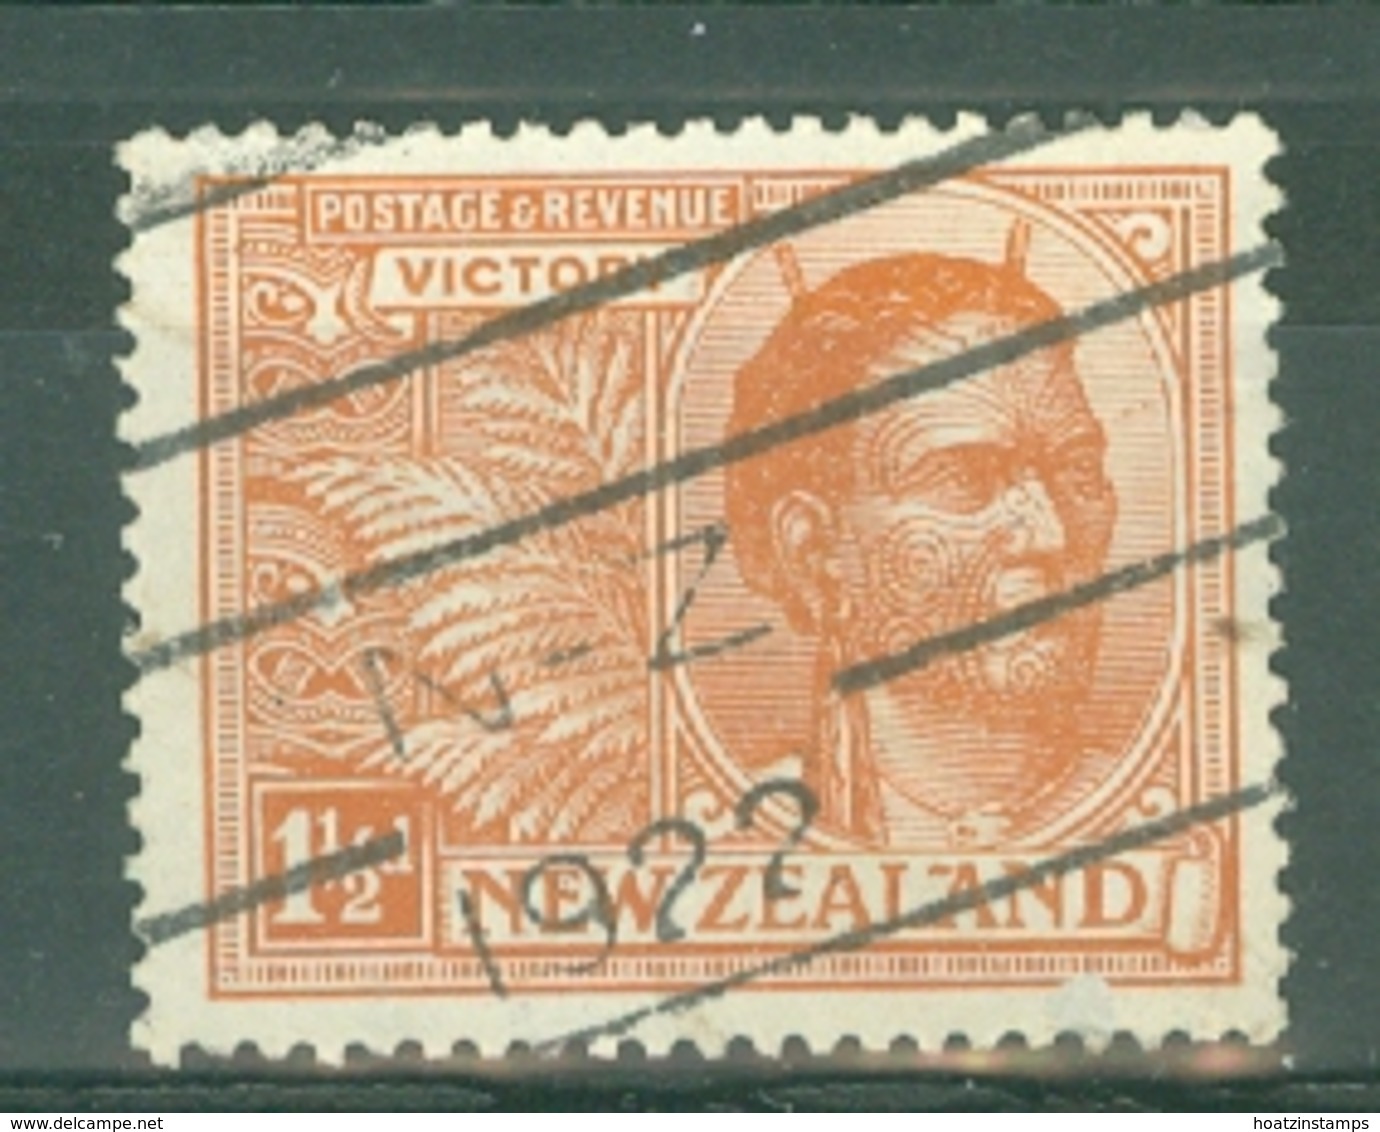 New Zealand: 1920   Victory     SG455     1½d    Used - Oblitérés